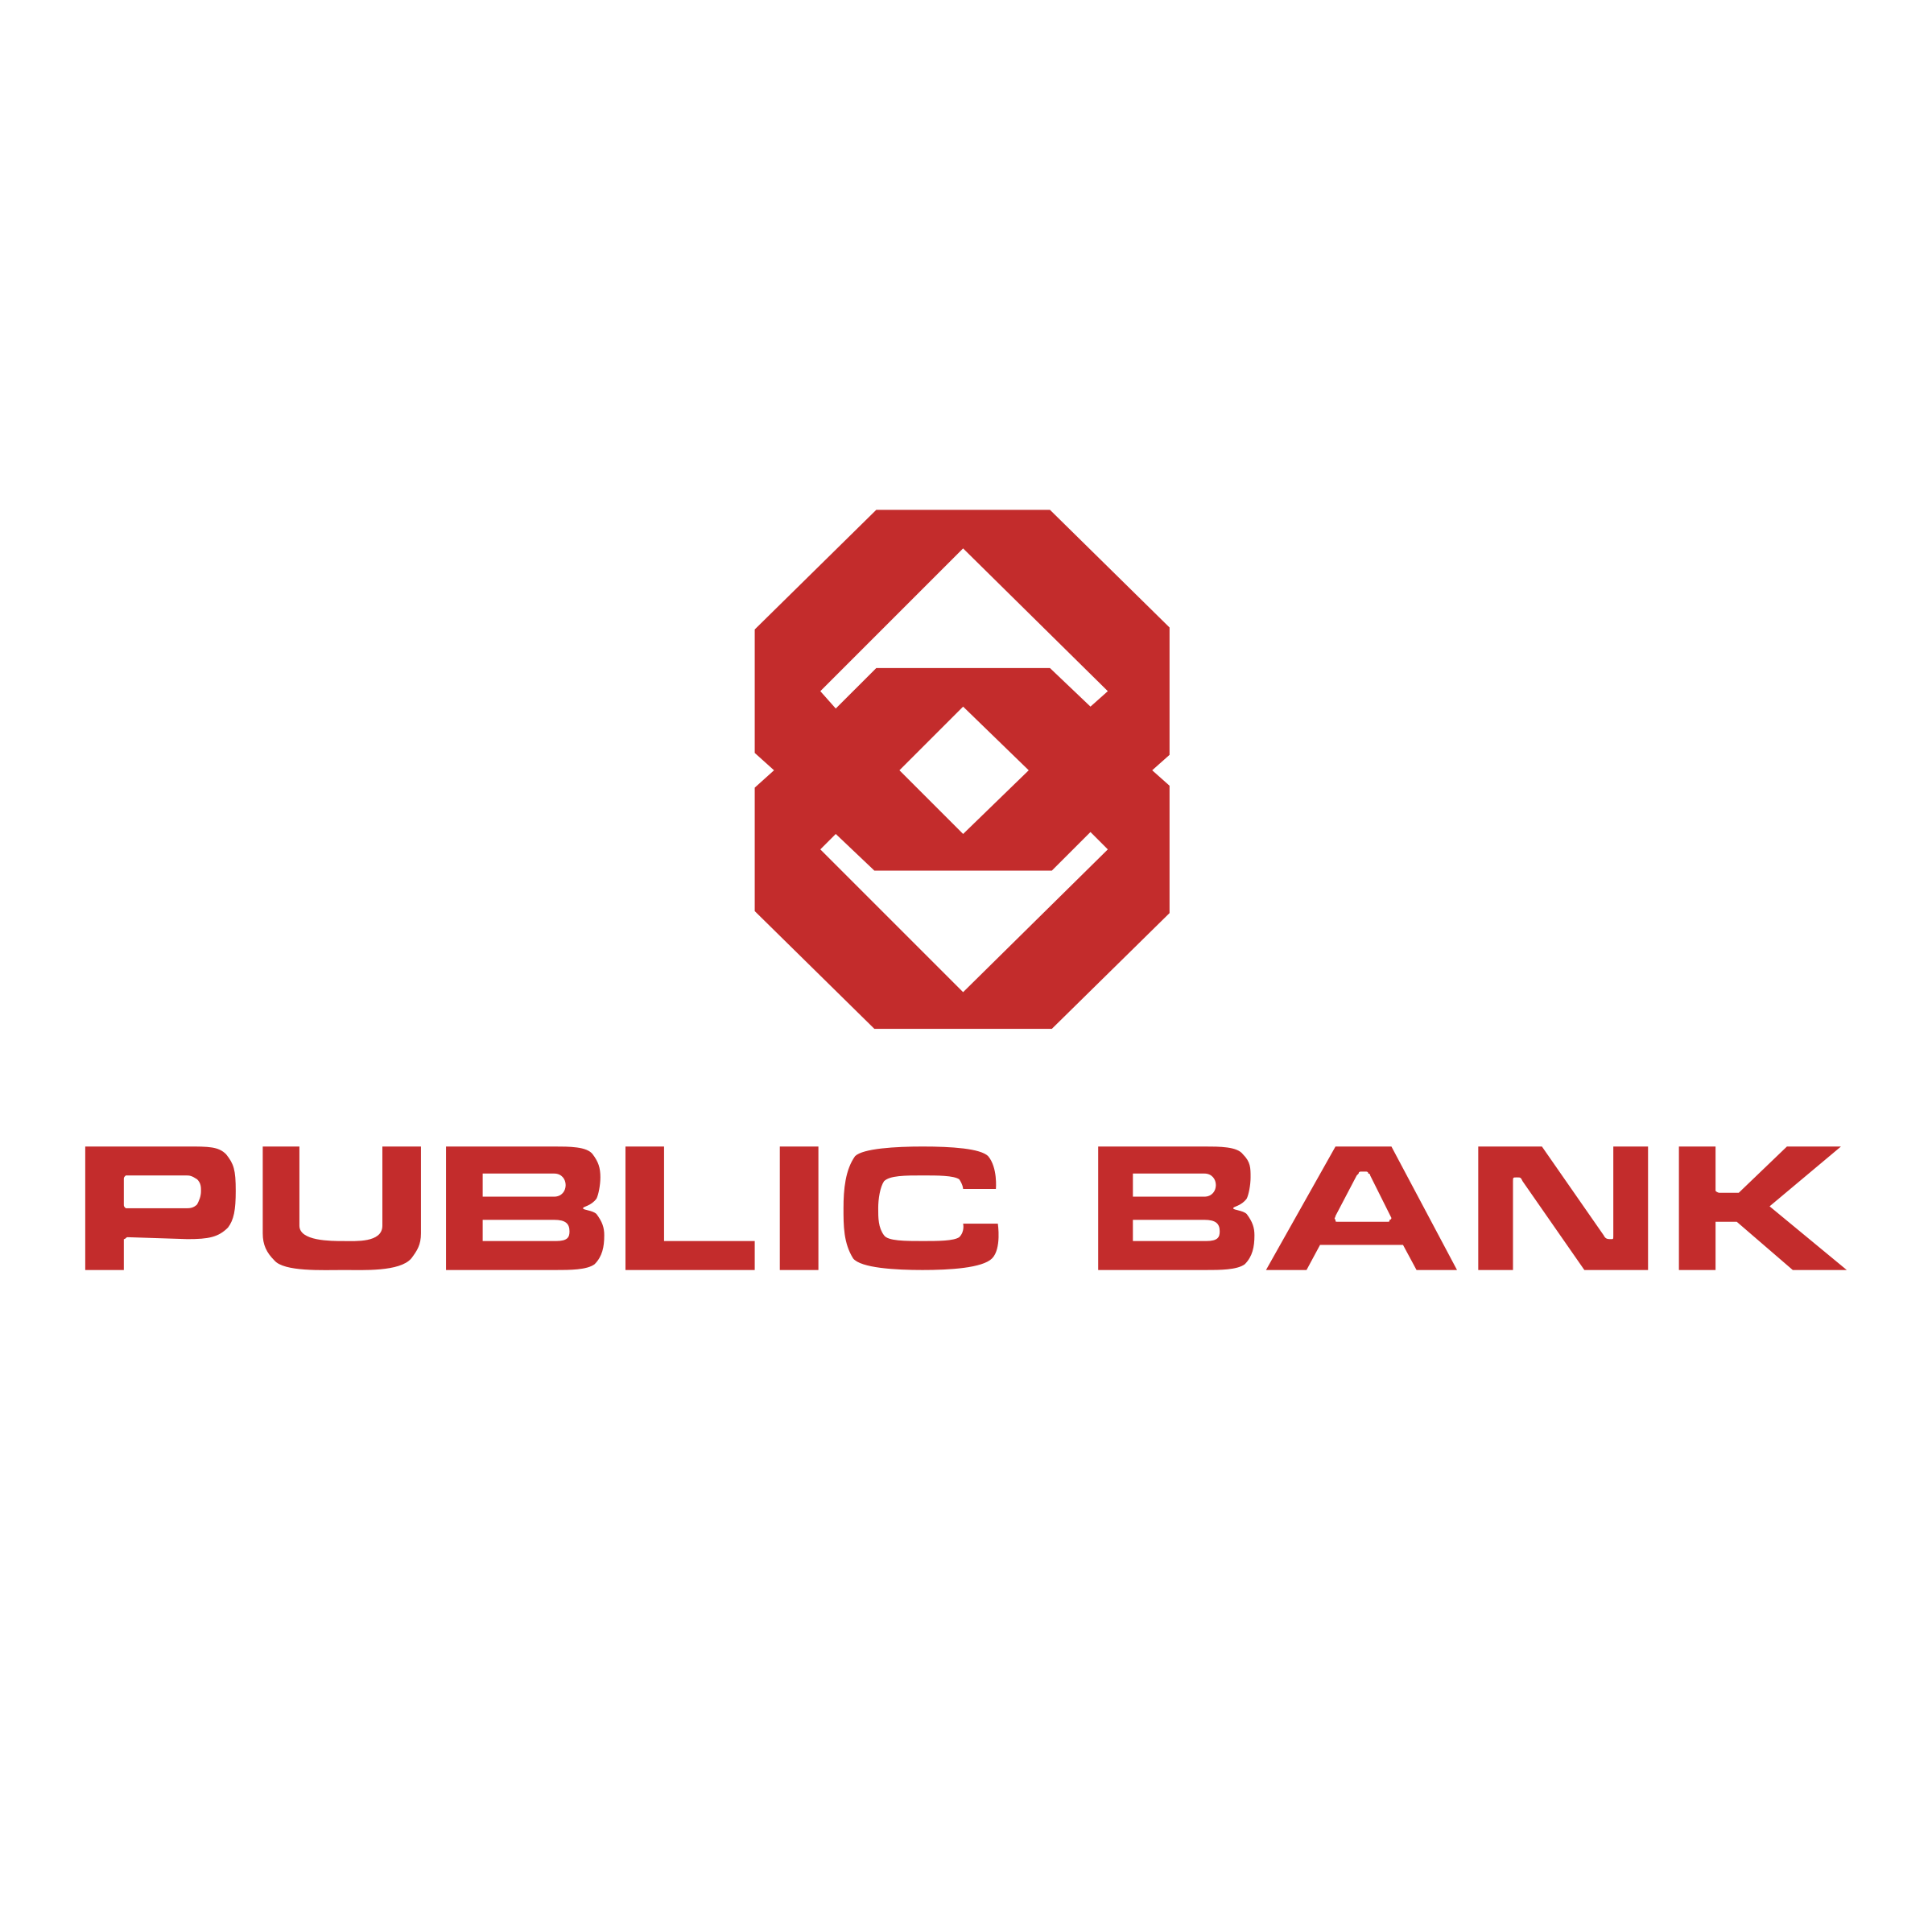 How to apply moratorium public bank